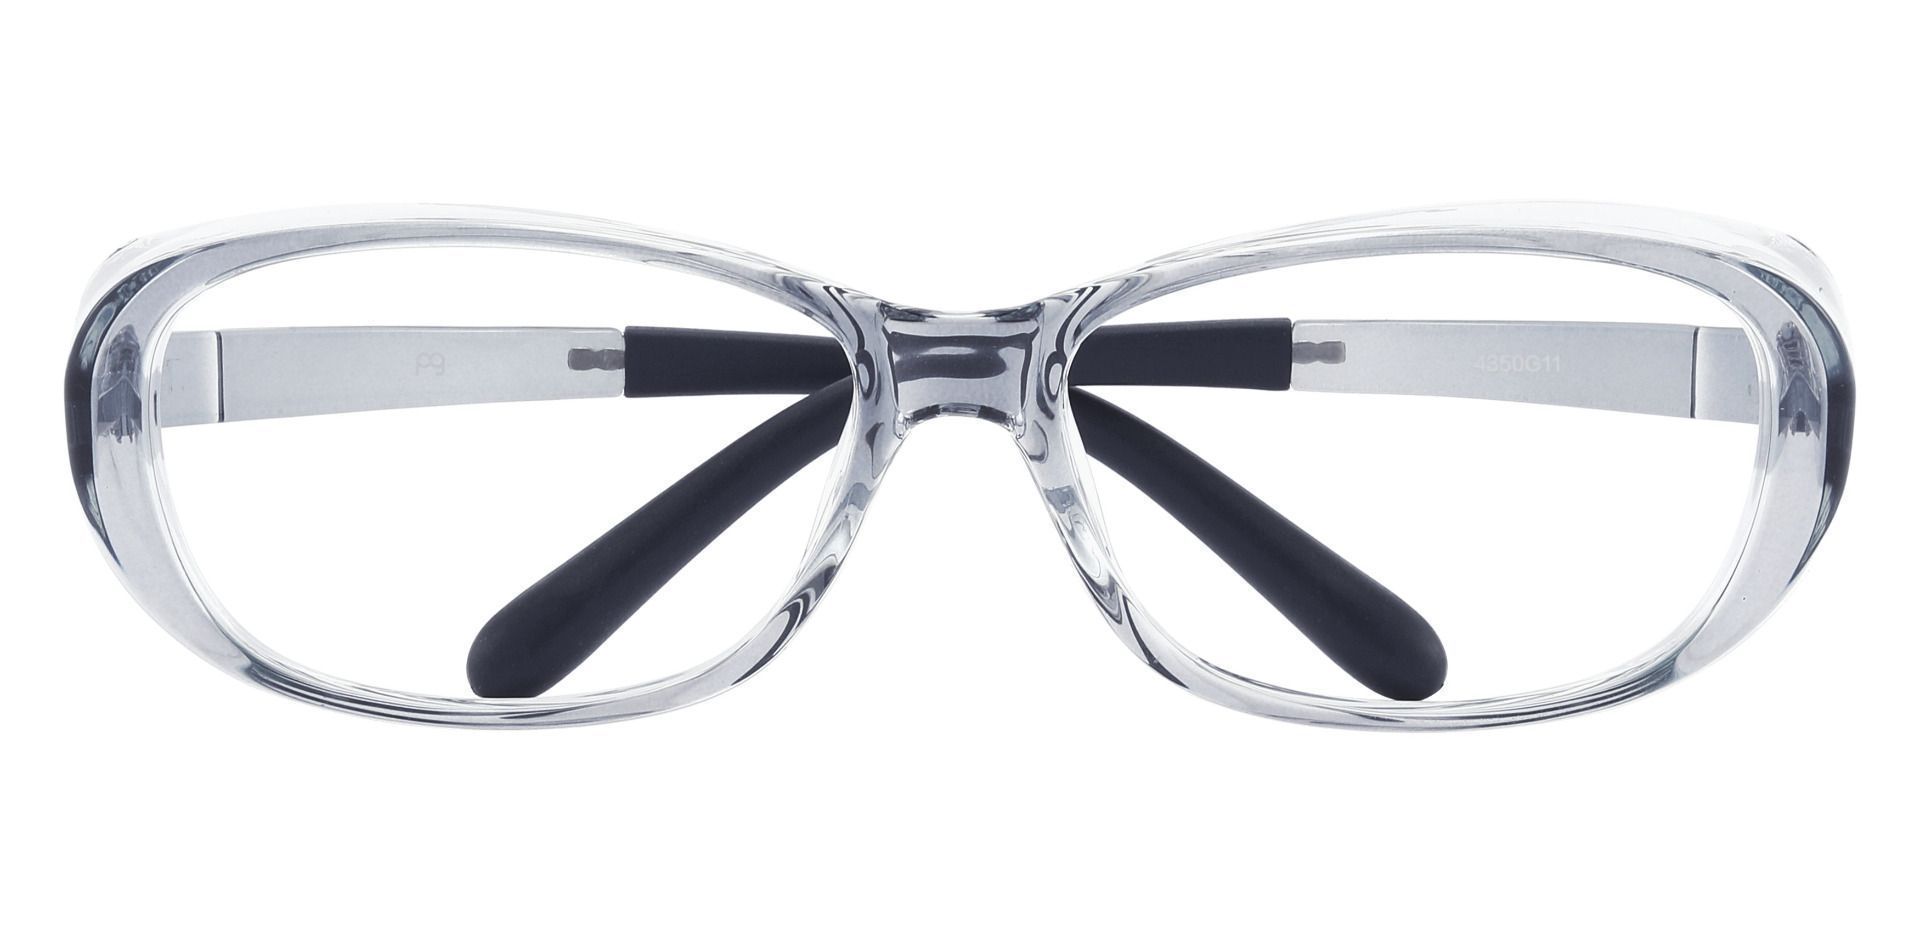 Omega Sports Goggles Blue Light Blocking Glasses - Gray